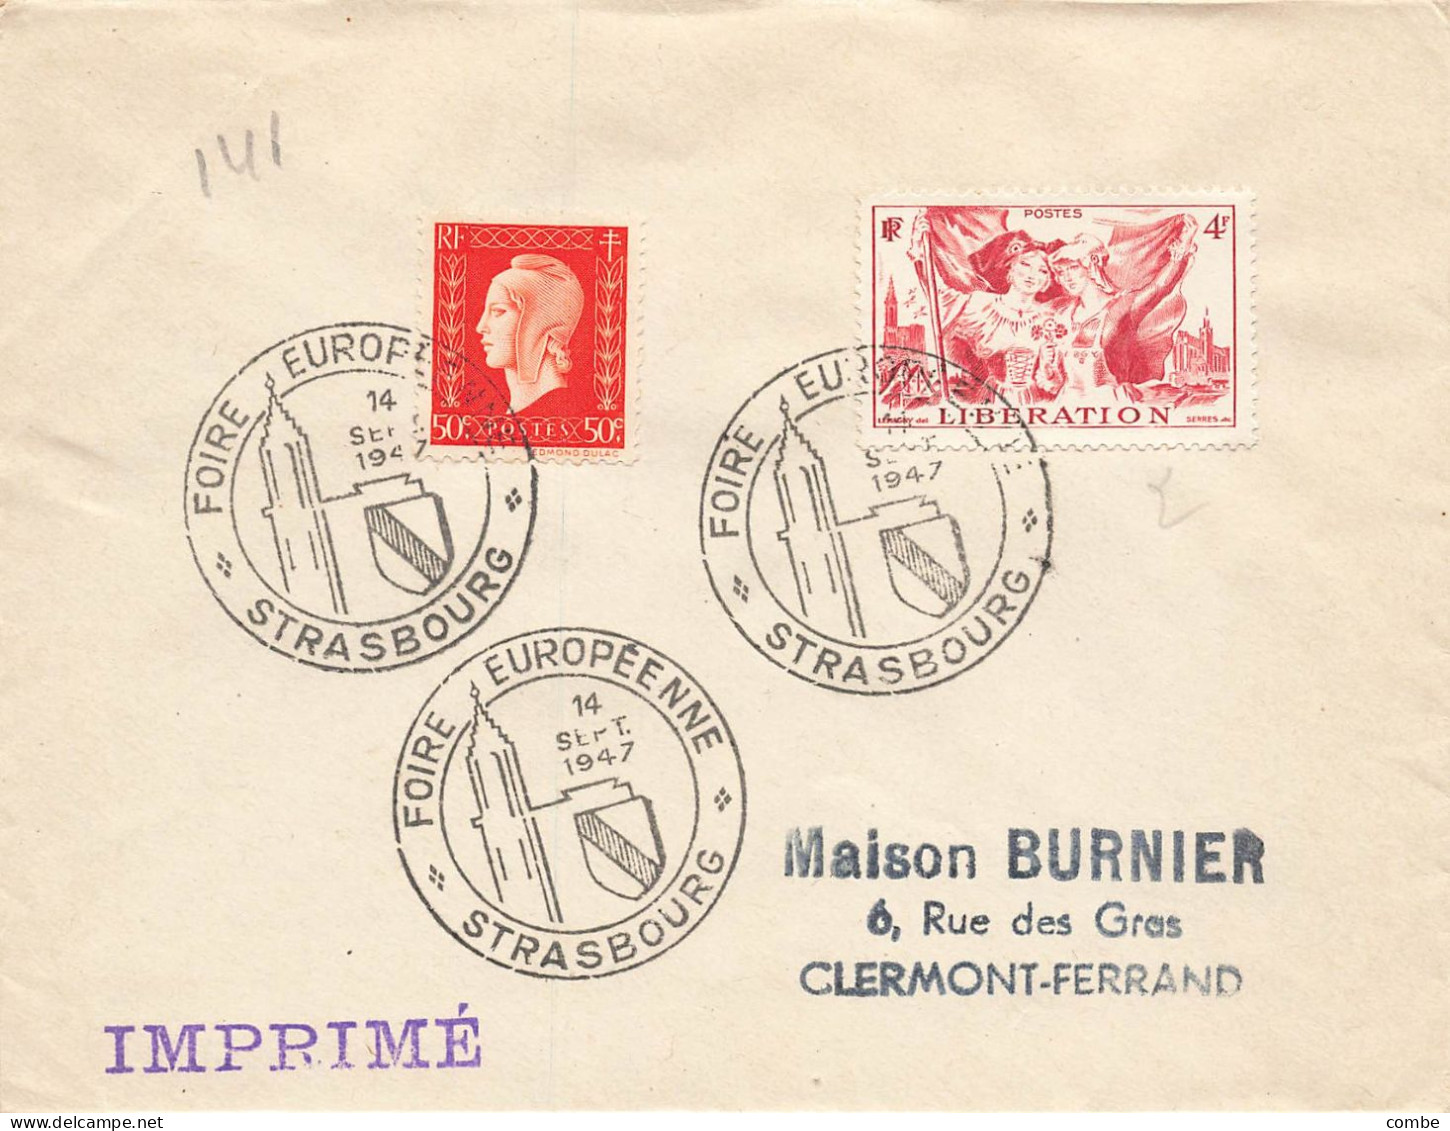 FOIRE EUROPEENNE DE STRASBOURG. 14 SEPT 1947 - Gedenkstempels